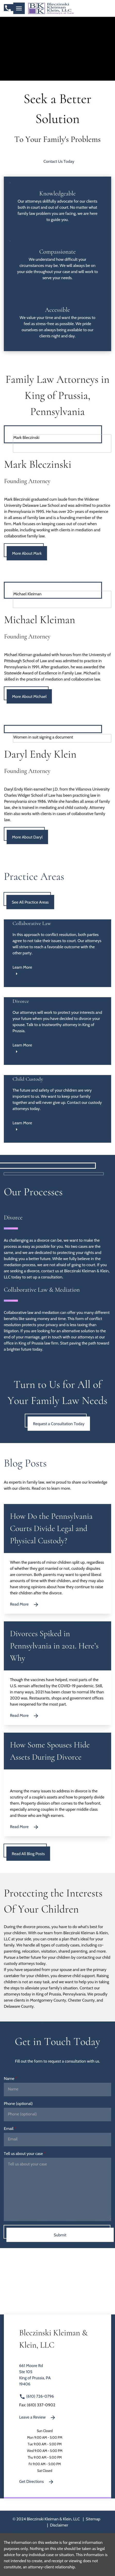 Bleczinski Kleiman & Klein, LLC - King of Prussia PA Lawyers